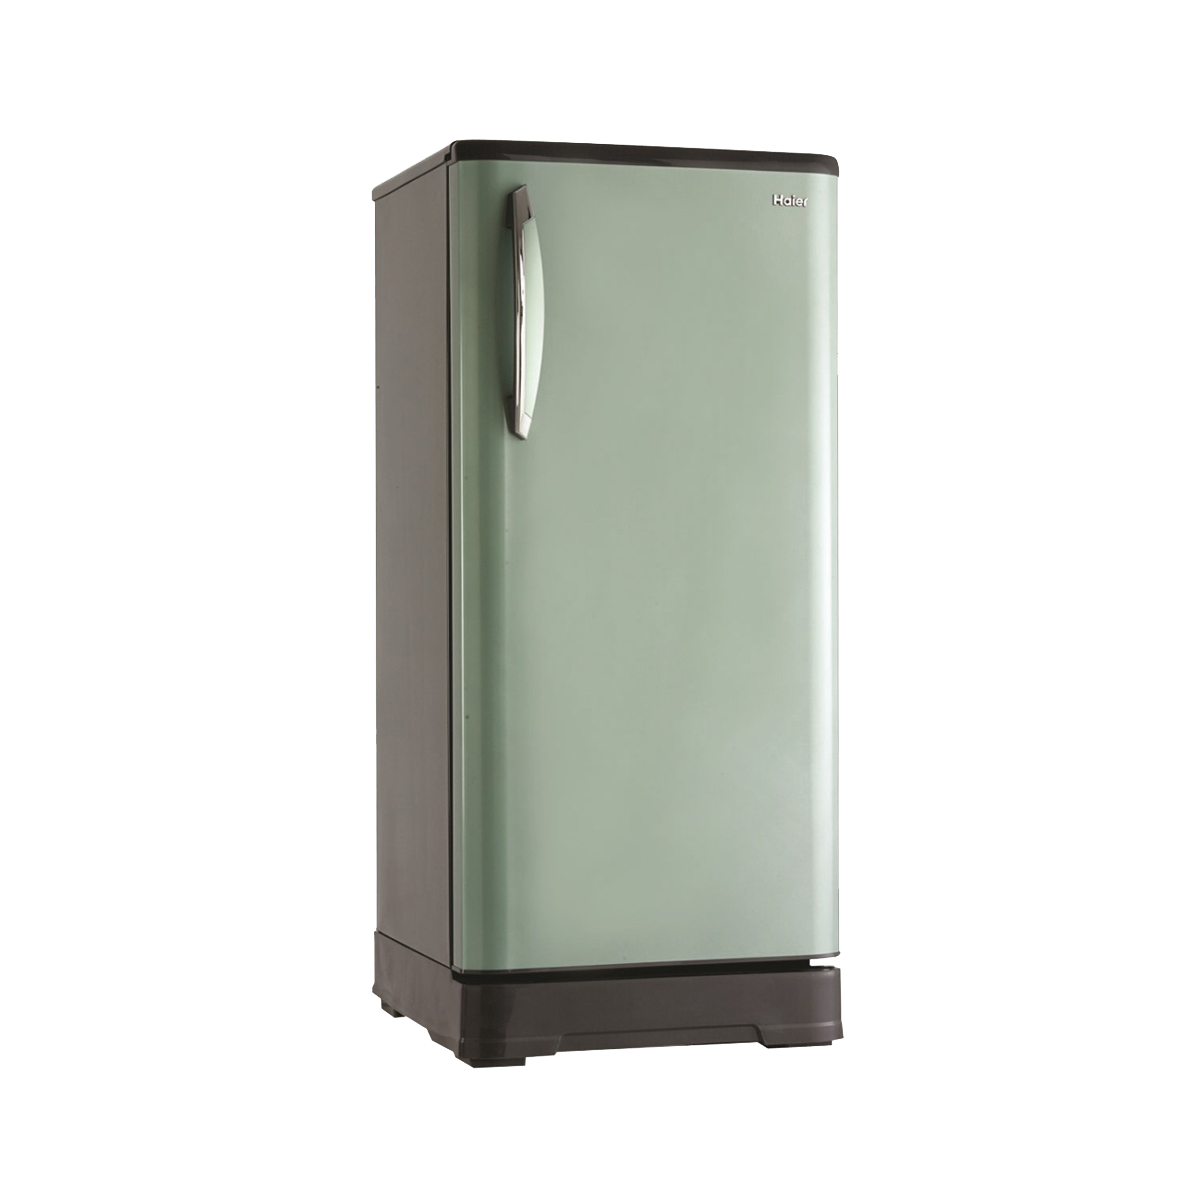 Single Door Refrigerator Png Photos - Refrigerator, Transparent background PNG HD thumbnail